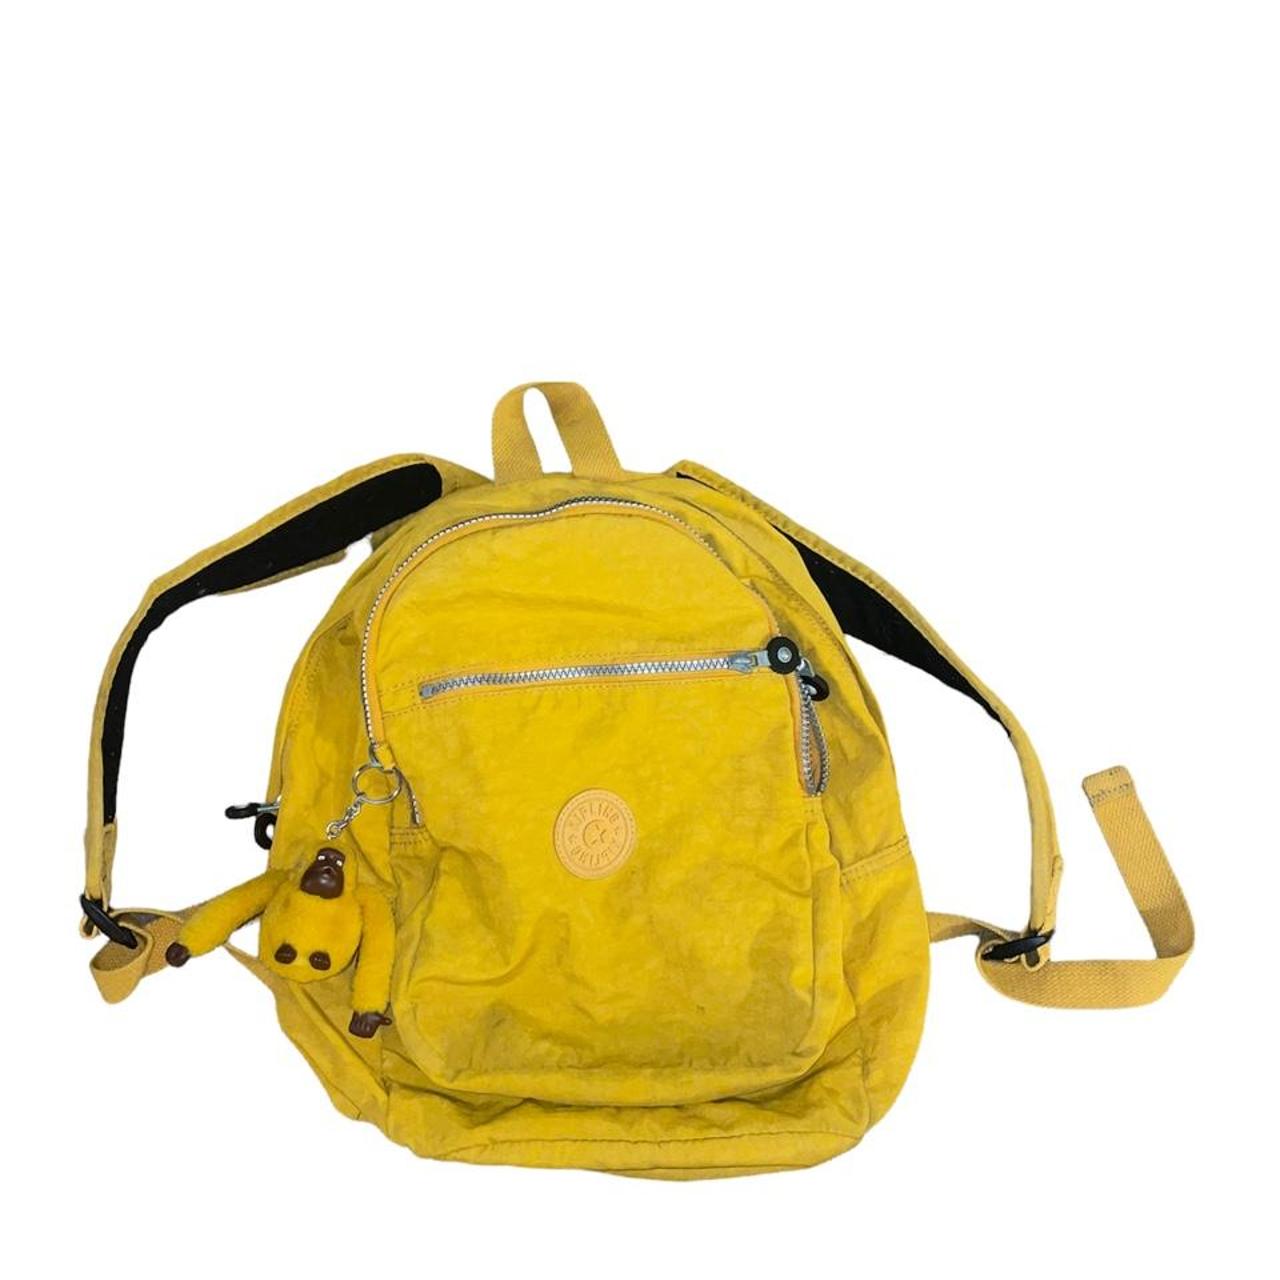 Product Image 1 - Kipling Bookbag 
Gold/mustard color 
In